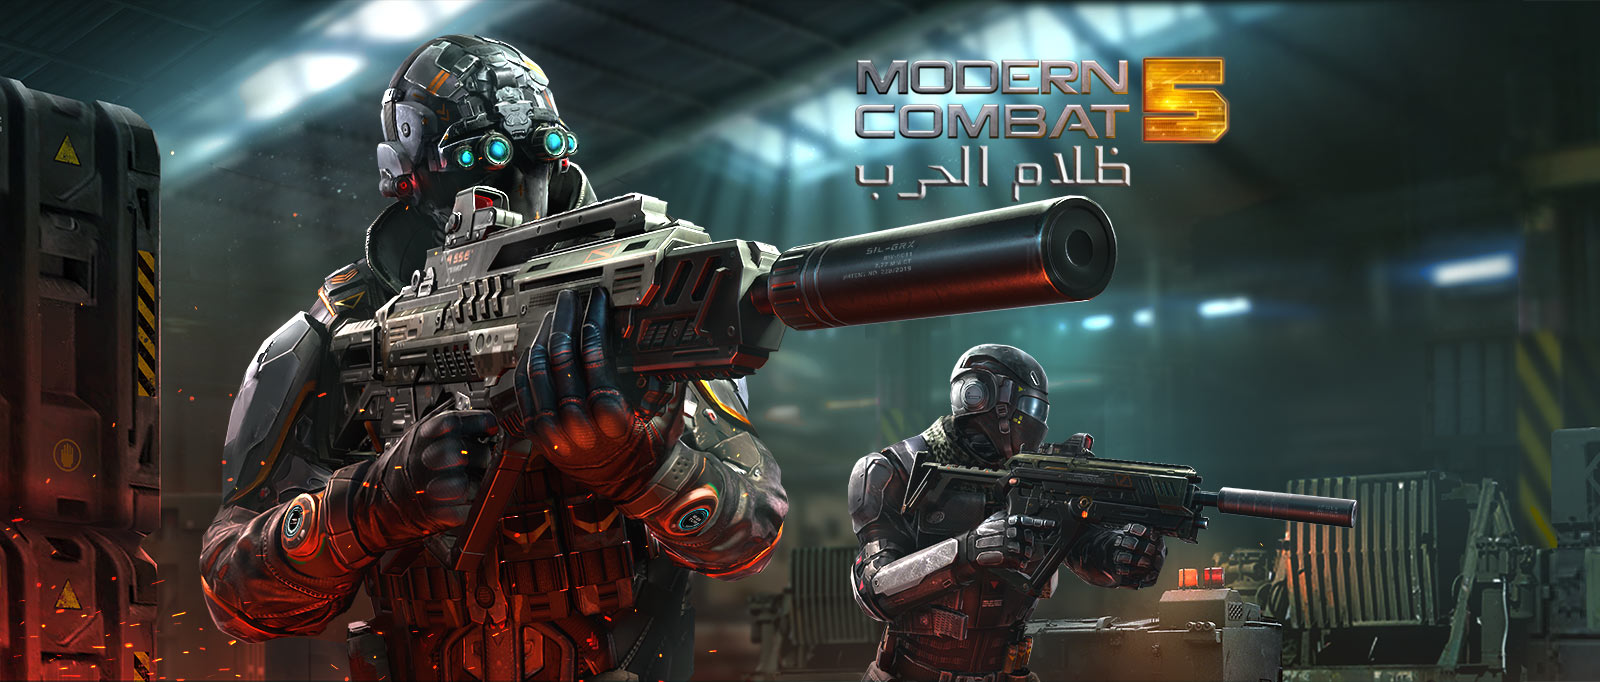 Modern Combat 5: ظلام الحرب